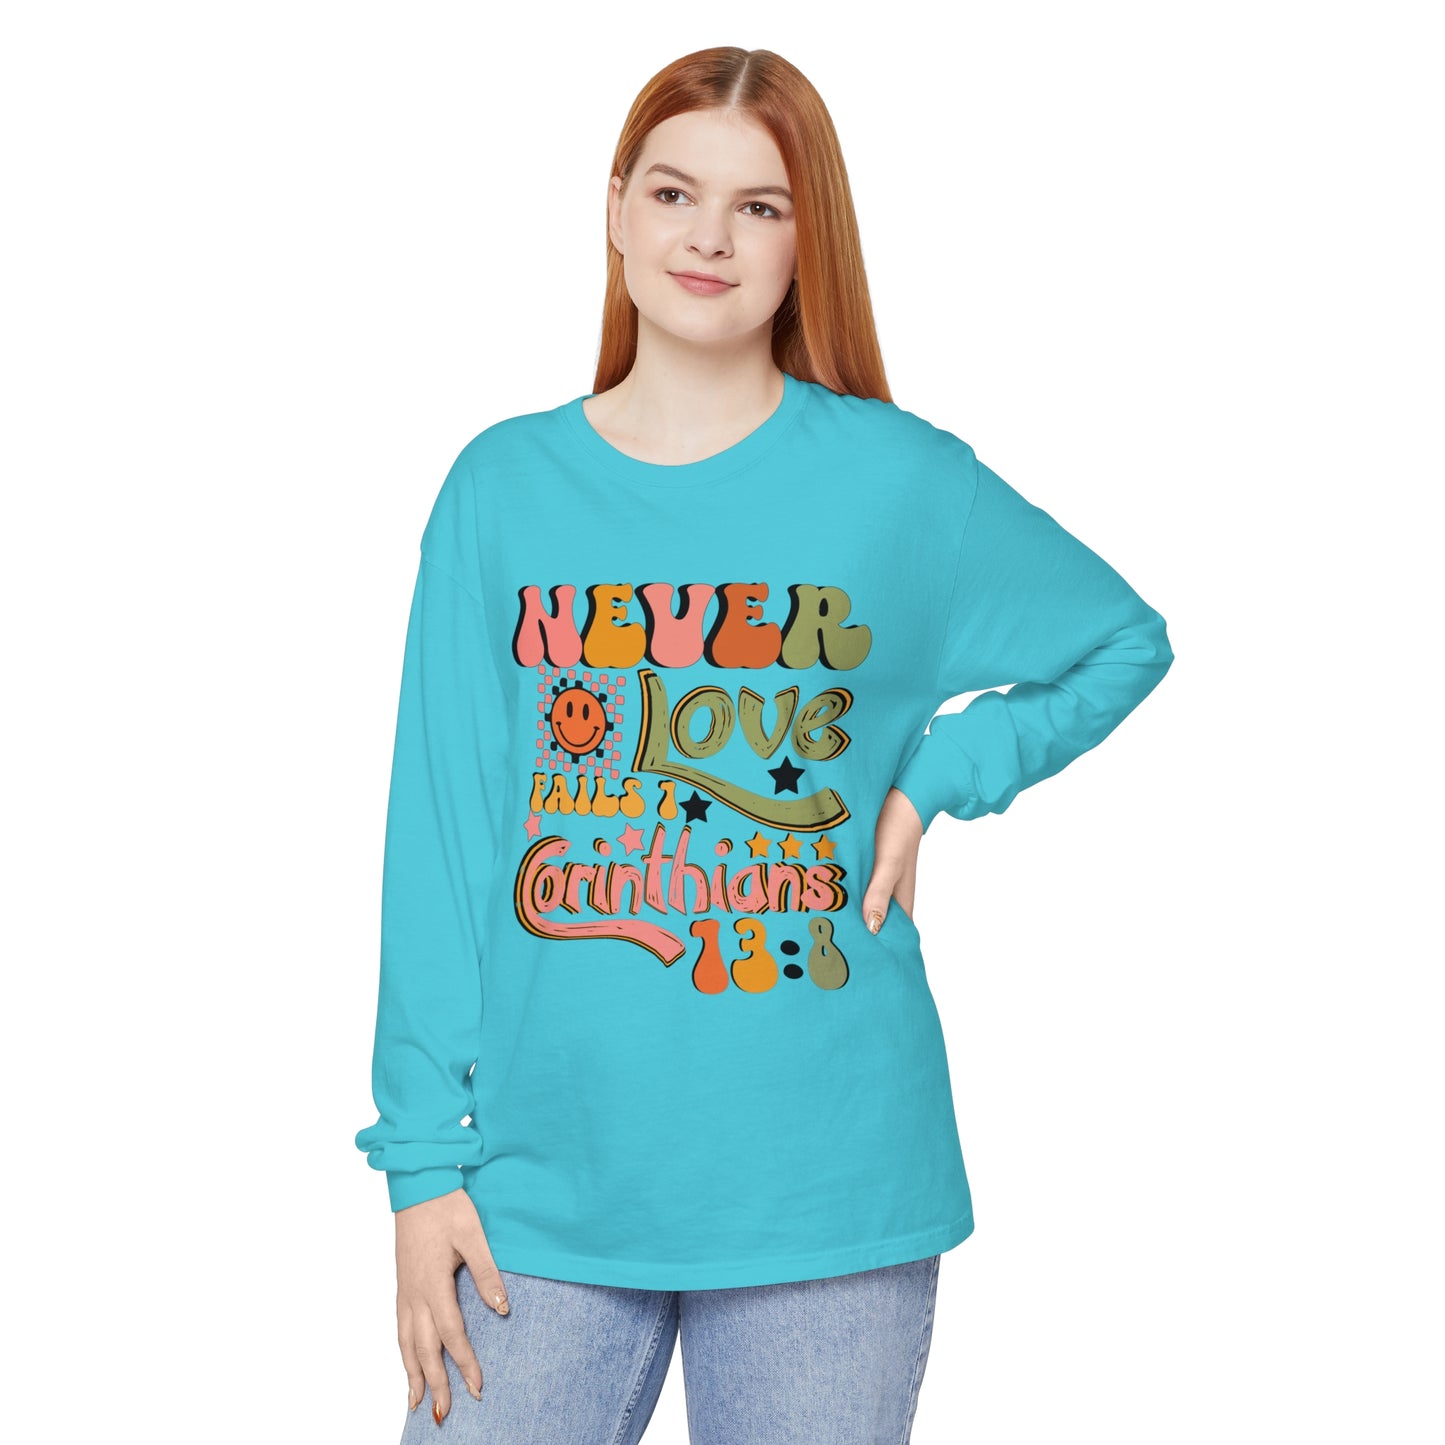 Love Never Fails Unisex Garment-dyed Long Sleeve T-Shirt